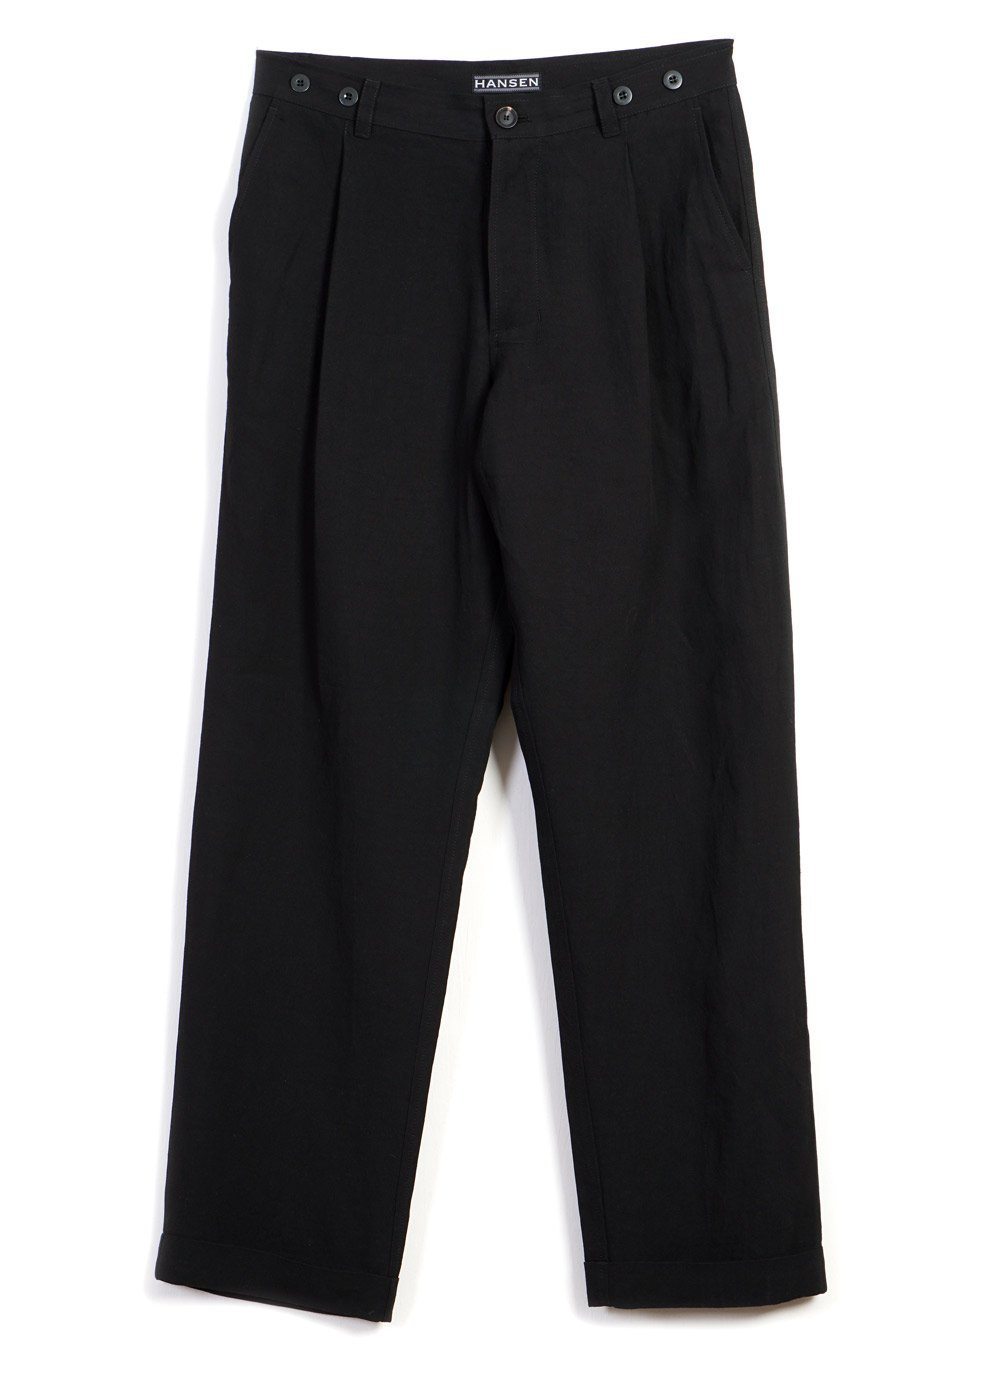 SUNE | Pleated Wide Cut Trousers | Black -HANSEN Garments- HANSEN Garments